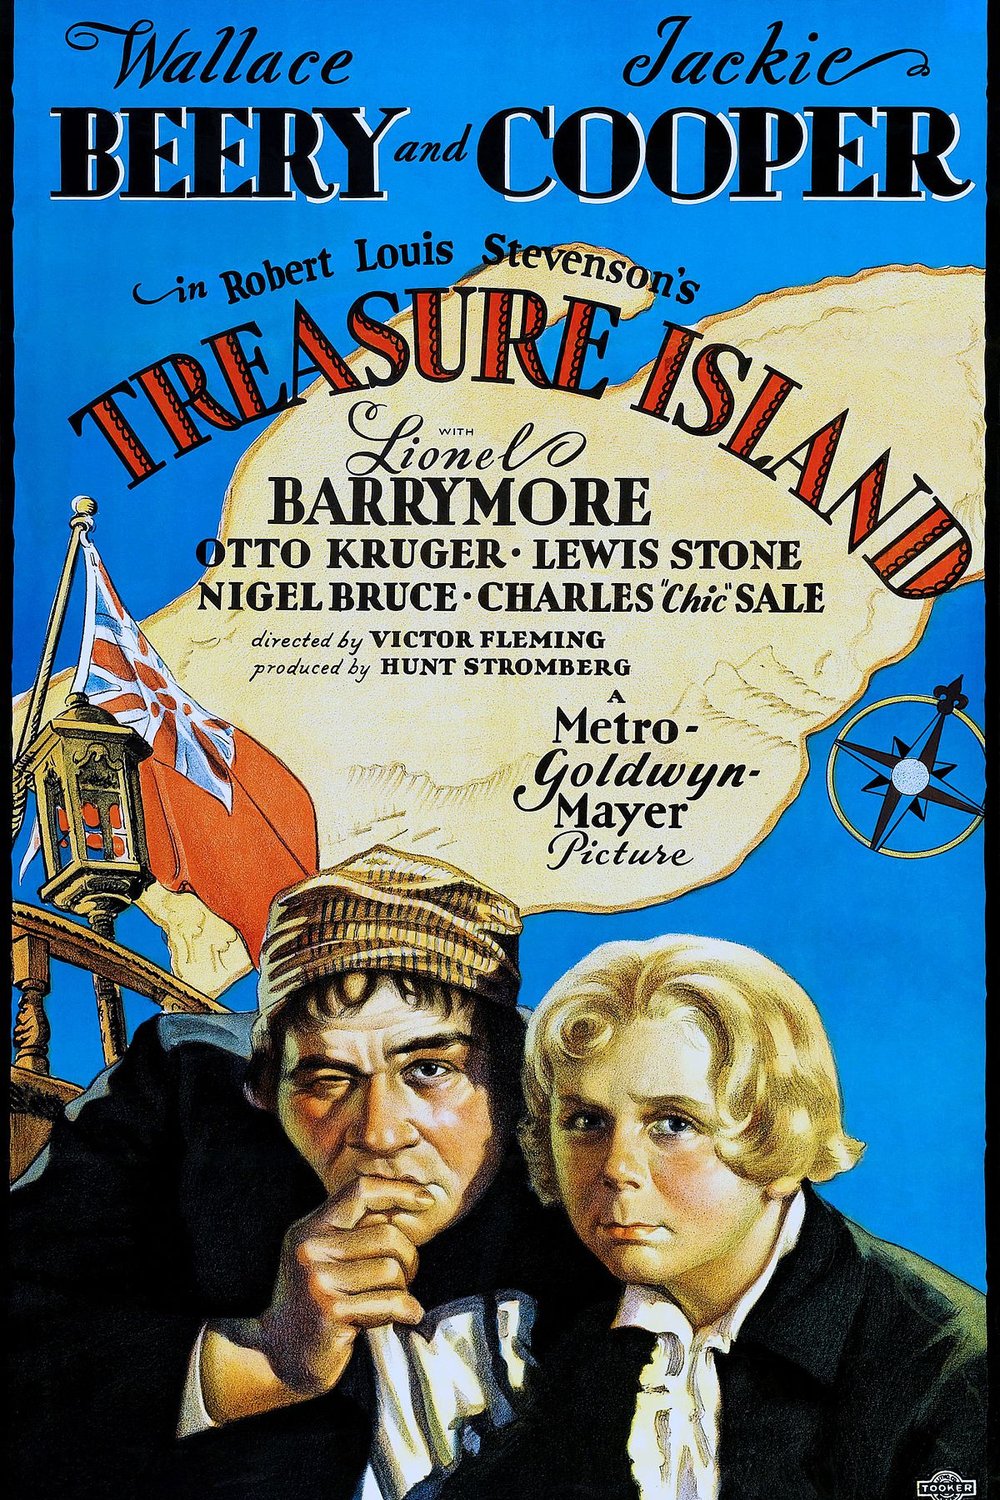 Poster of the movie Treasure Island